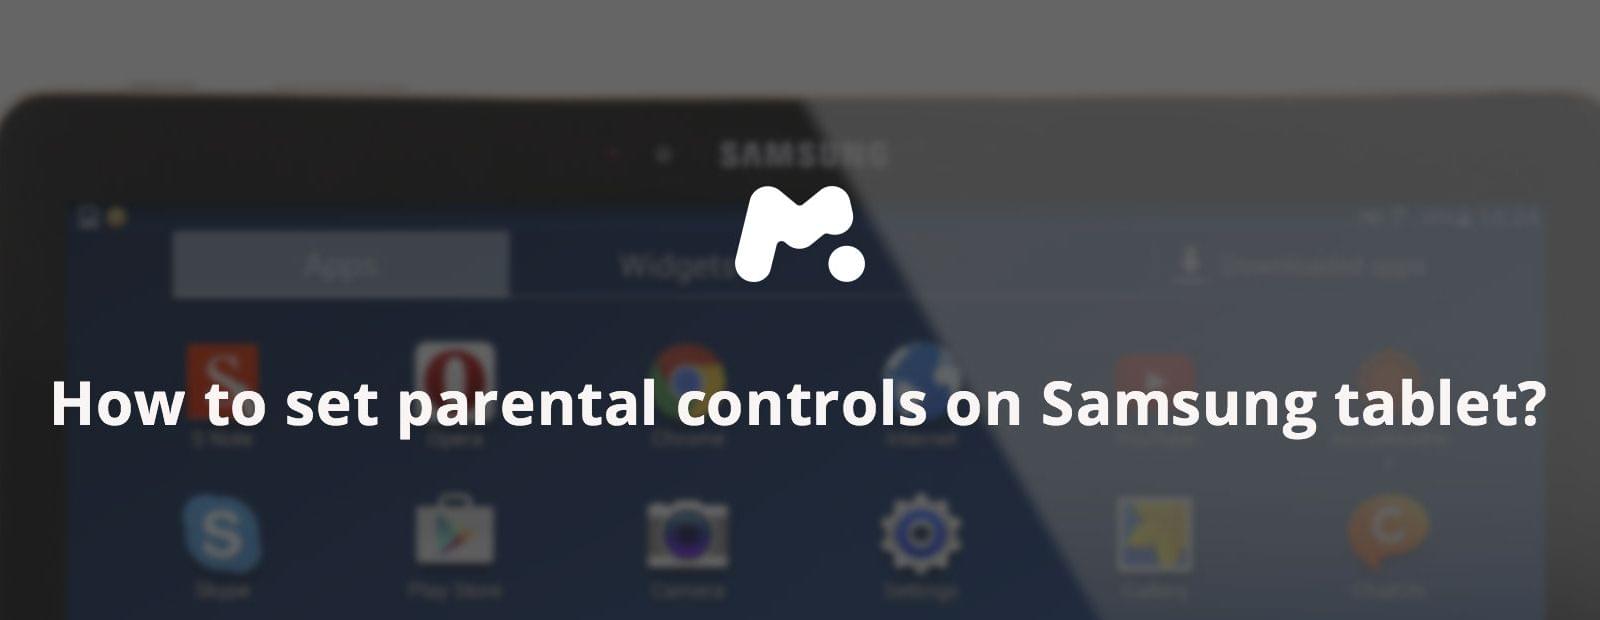 How to set parental controls on a Samsung tablet? - How Do You Put Parental Controls On A Tablet